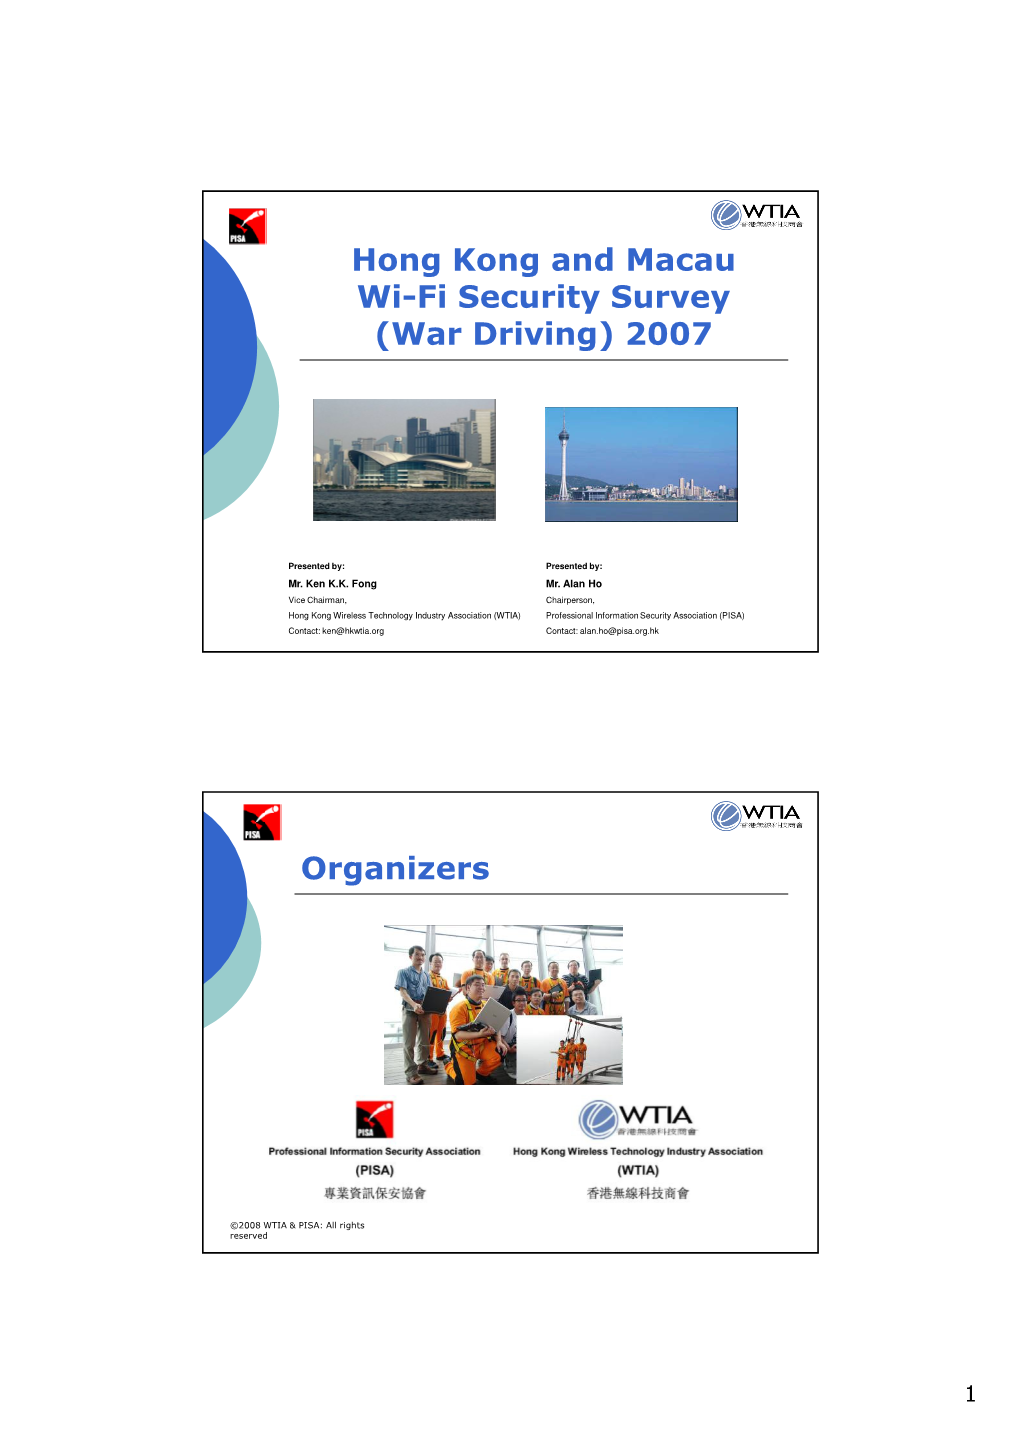 Hong Kong and Macau Wi-Fi Security Survey (War Driving) 2007 Organizers